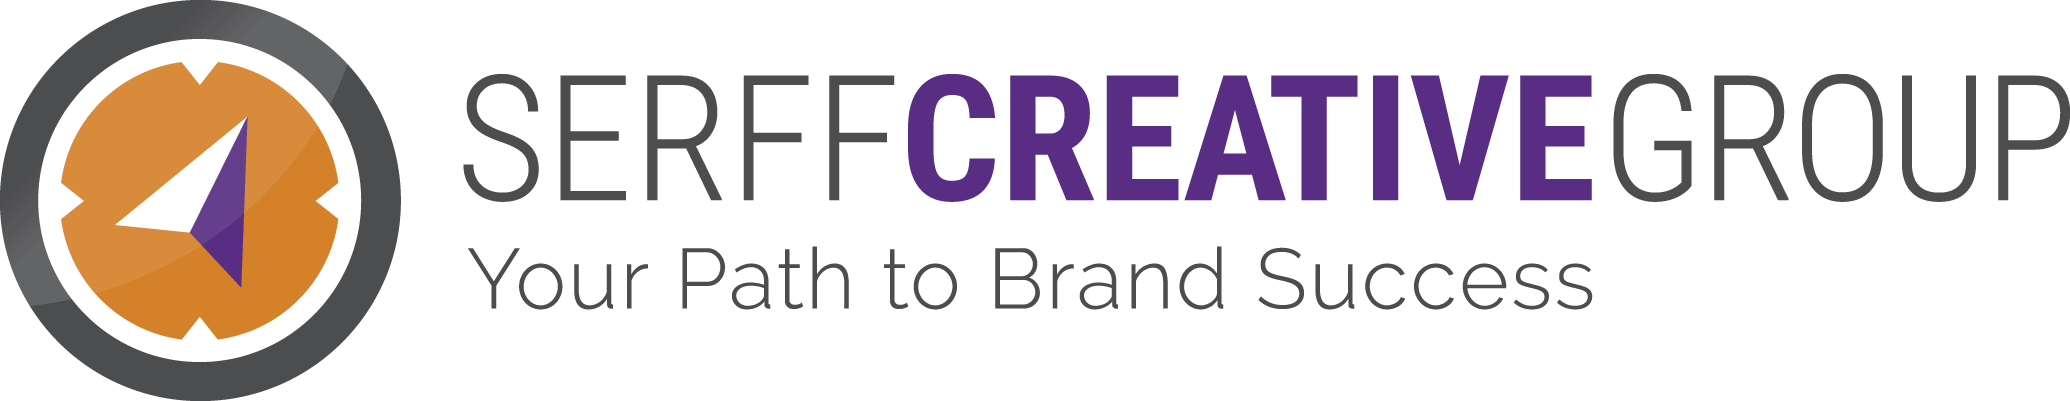 Serff Creative Group Logo